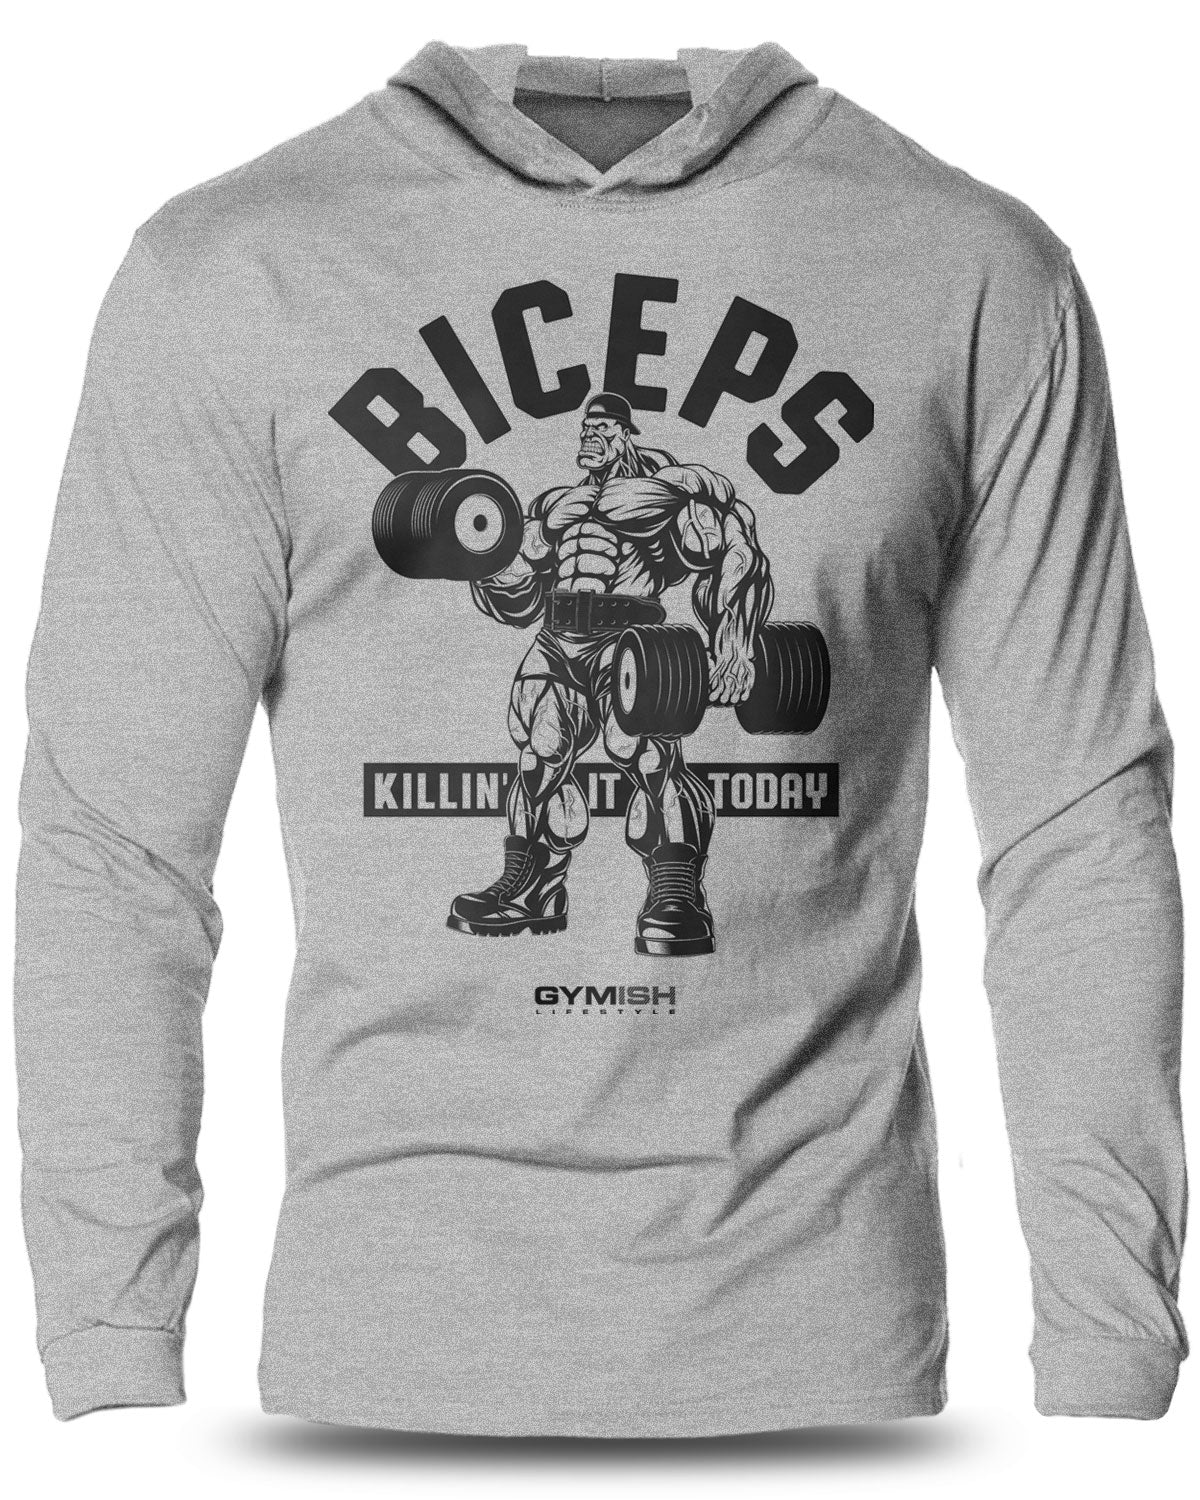 032- BICEPS Killin' It Lightweight Long Sleeve Hooded T-shirt for Men